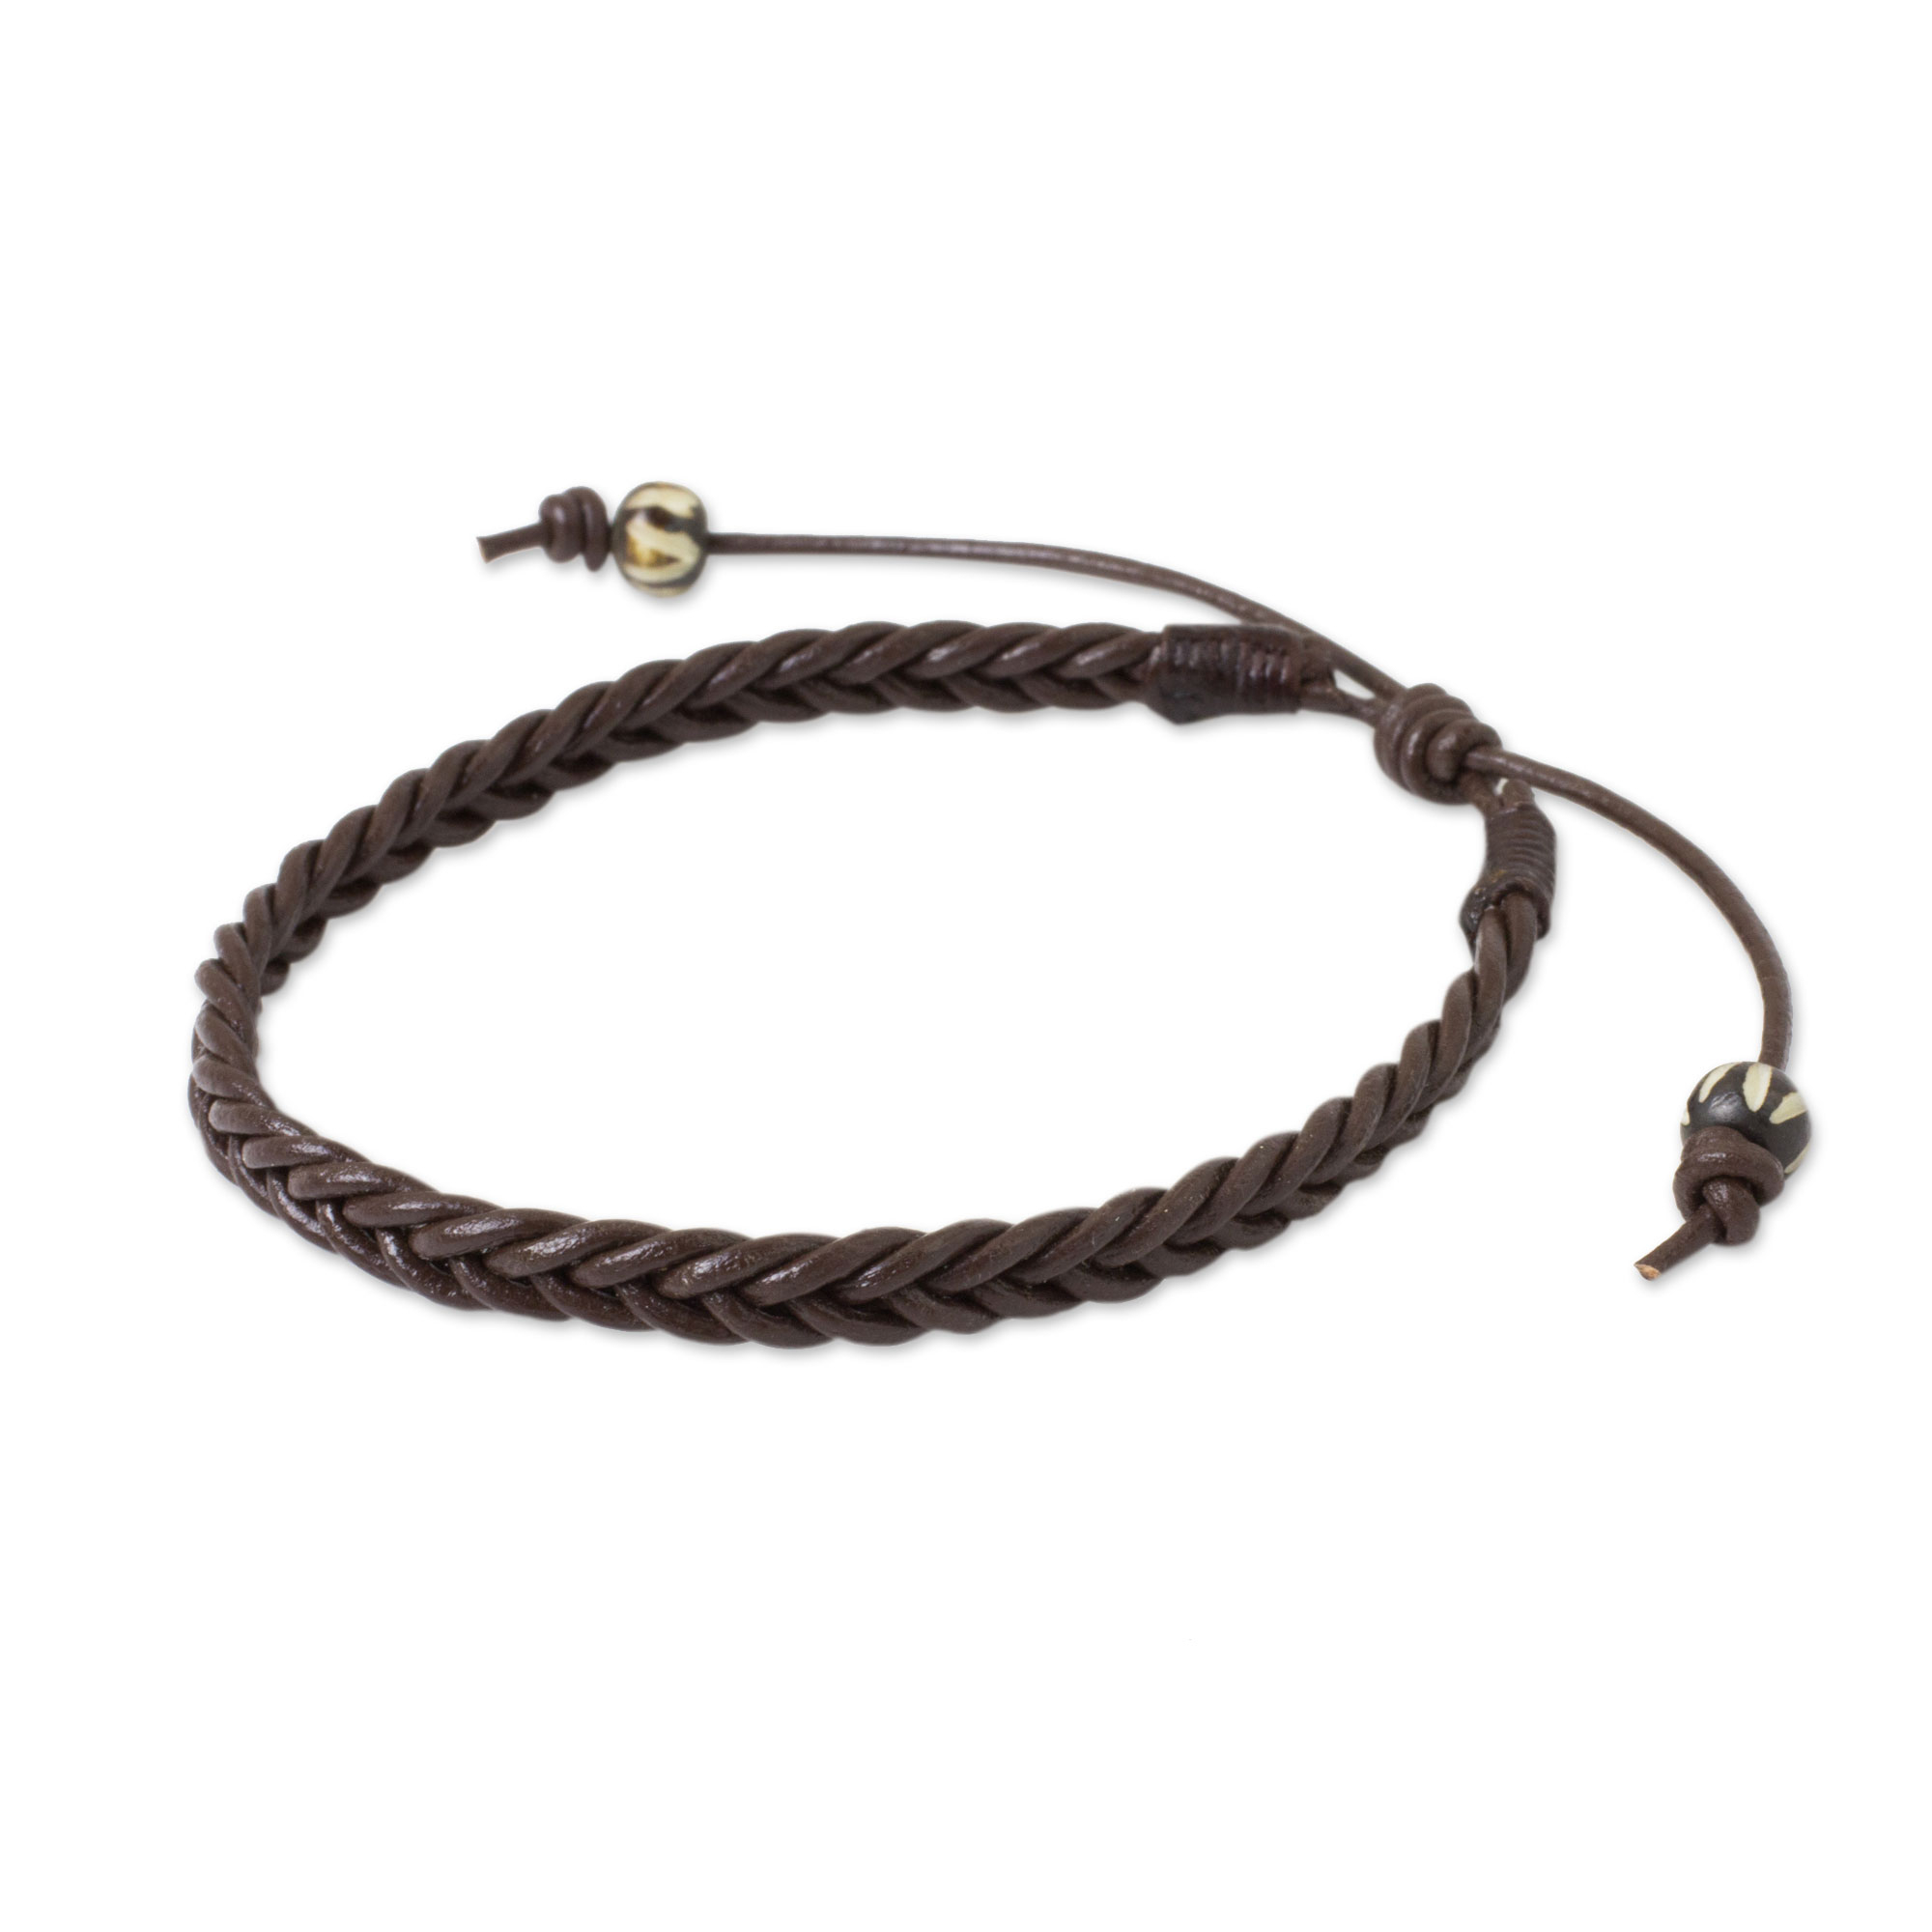 Braid Leather Bracelet, Leather Braided Rope Bracelet